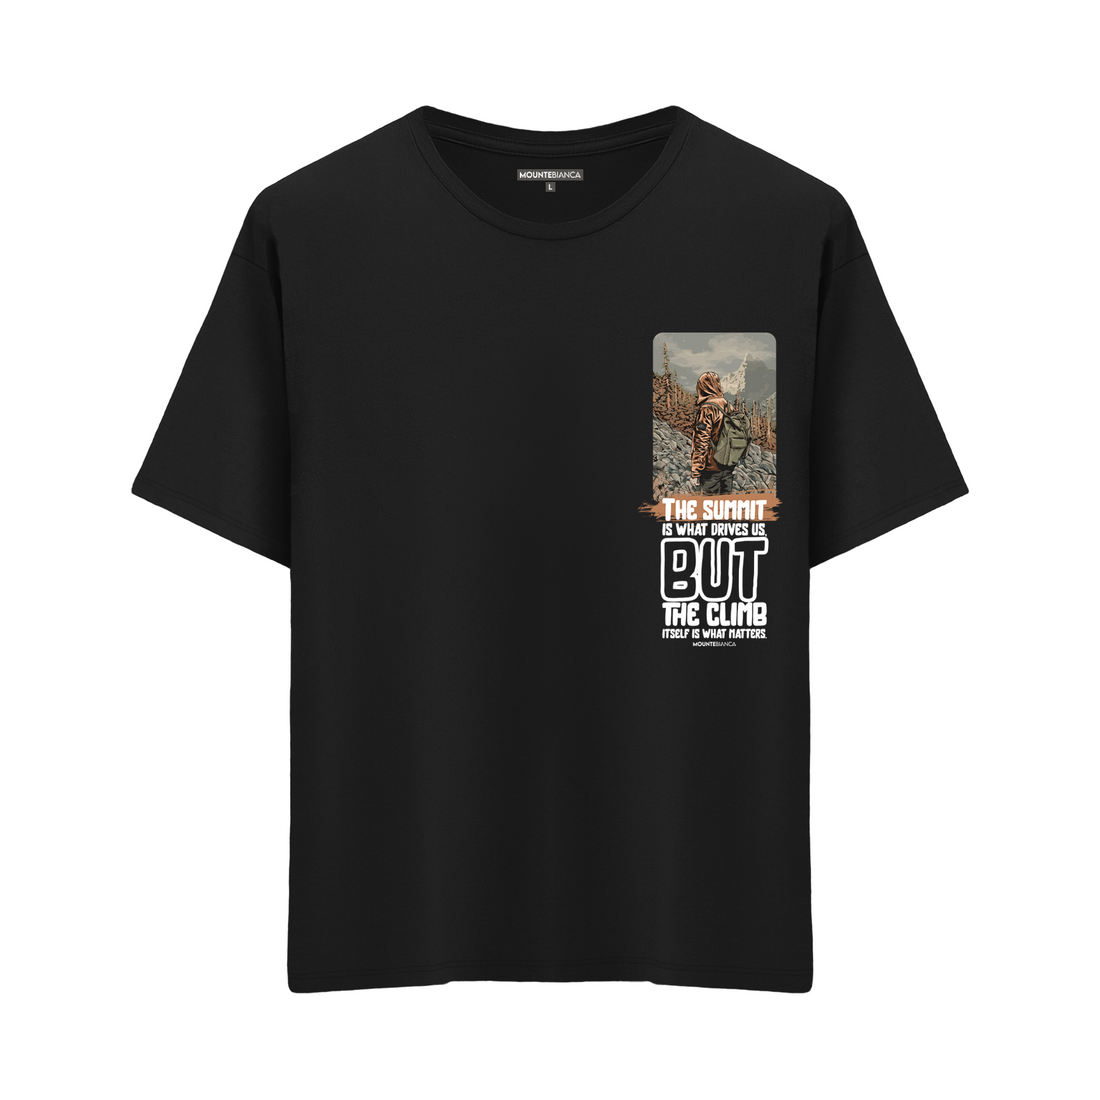 Self Climb  - Oversize T-shirt